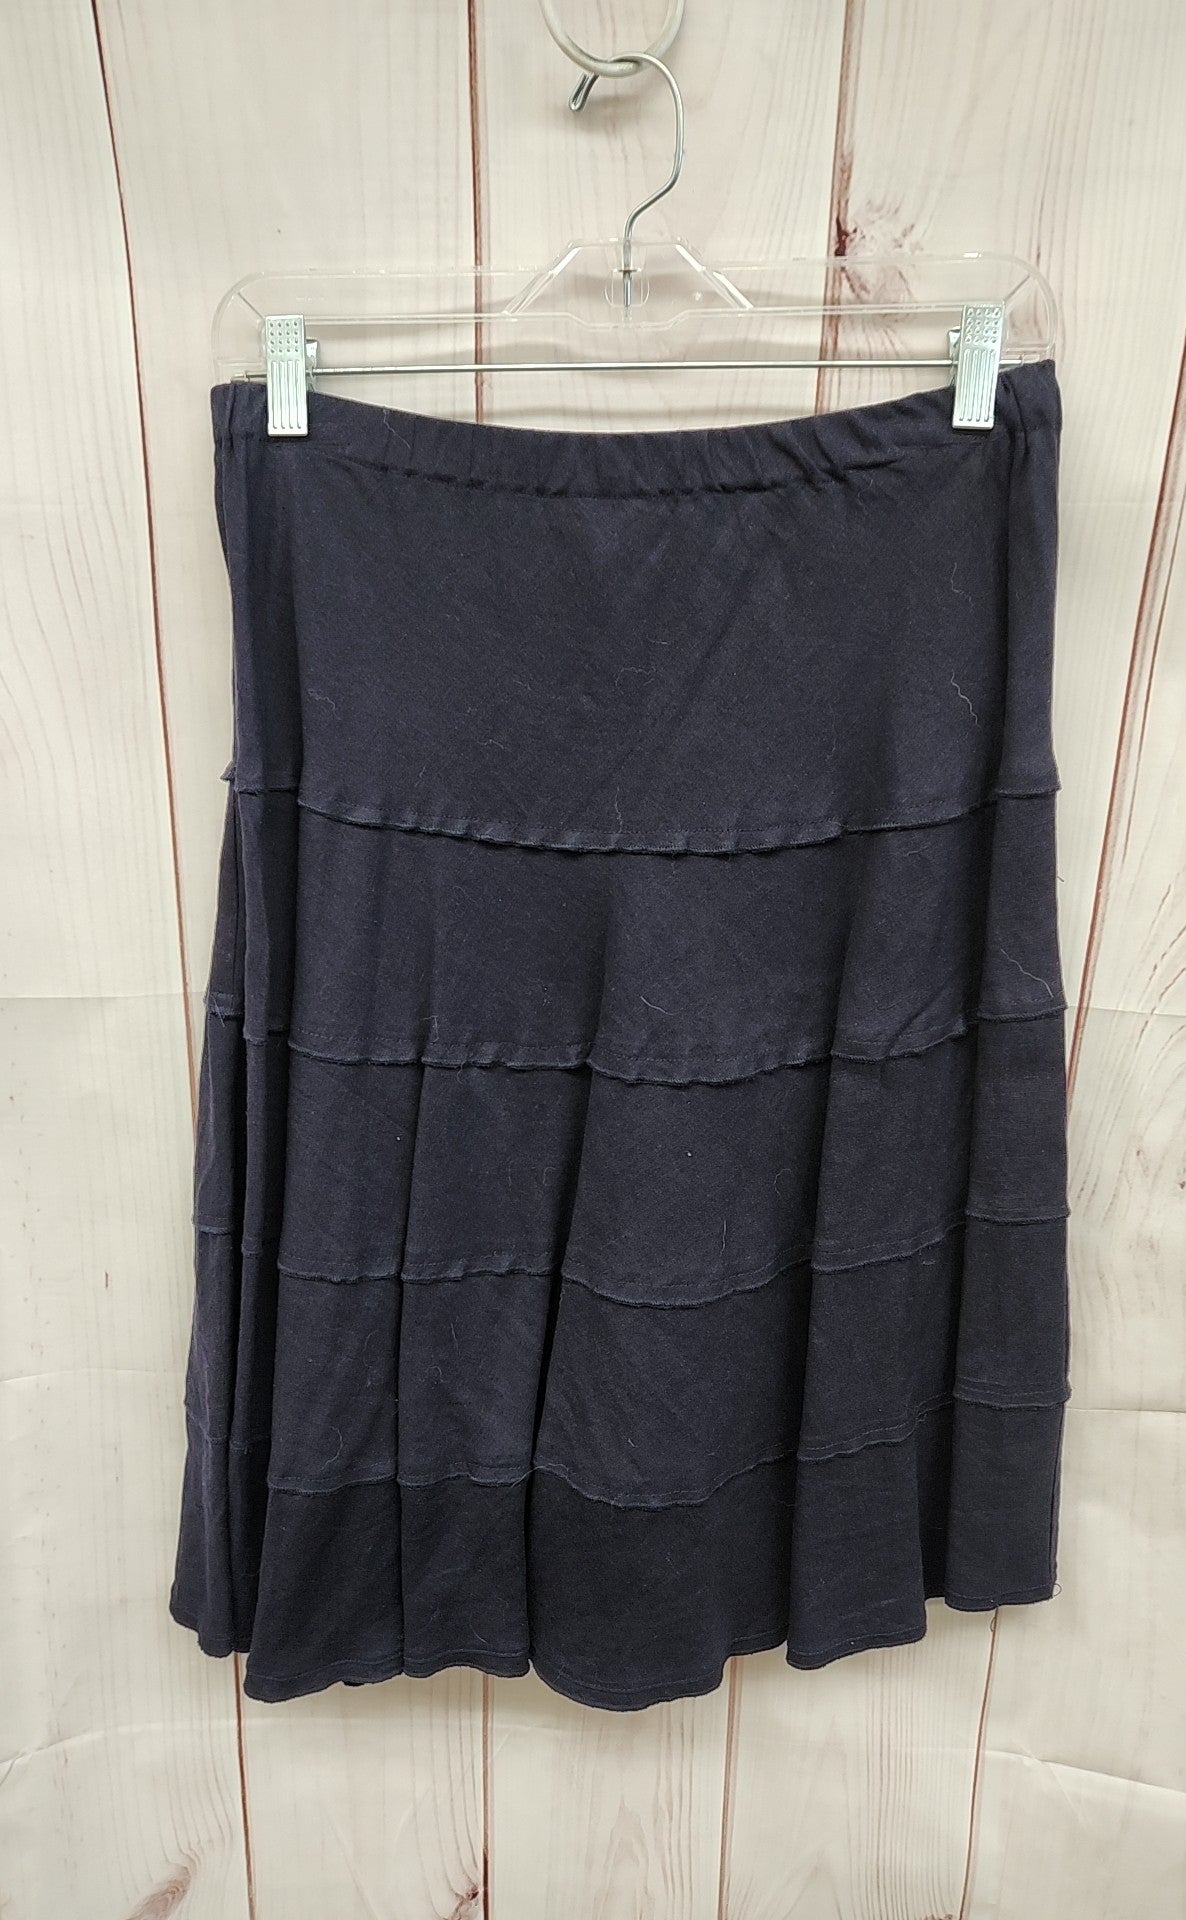 Chelsea & Theodore Women's Size M Navy Linen Blend Skirt